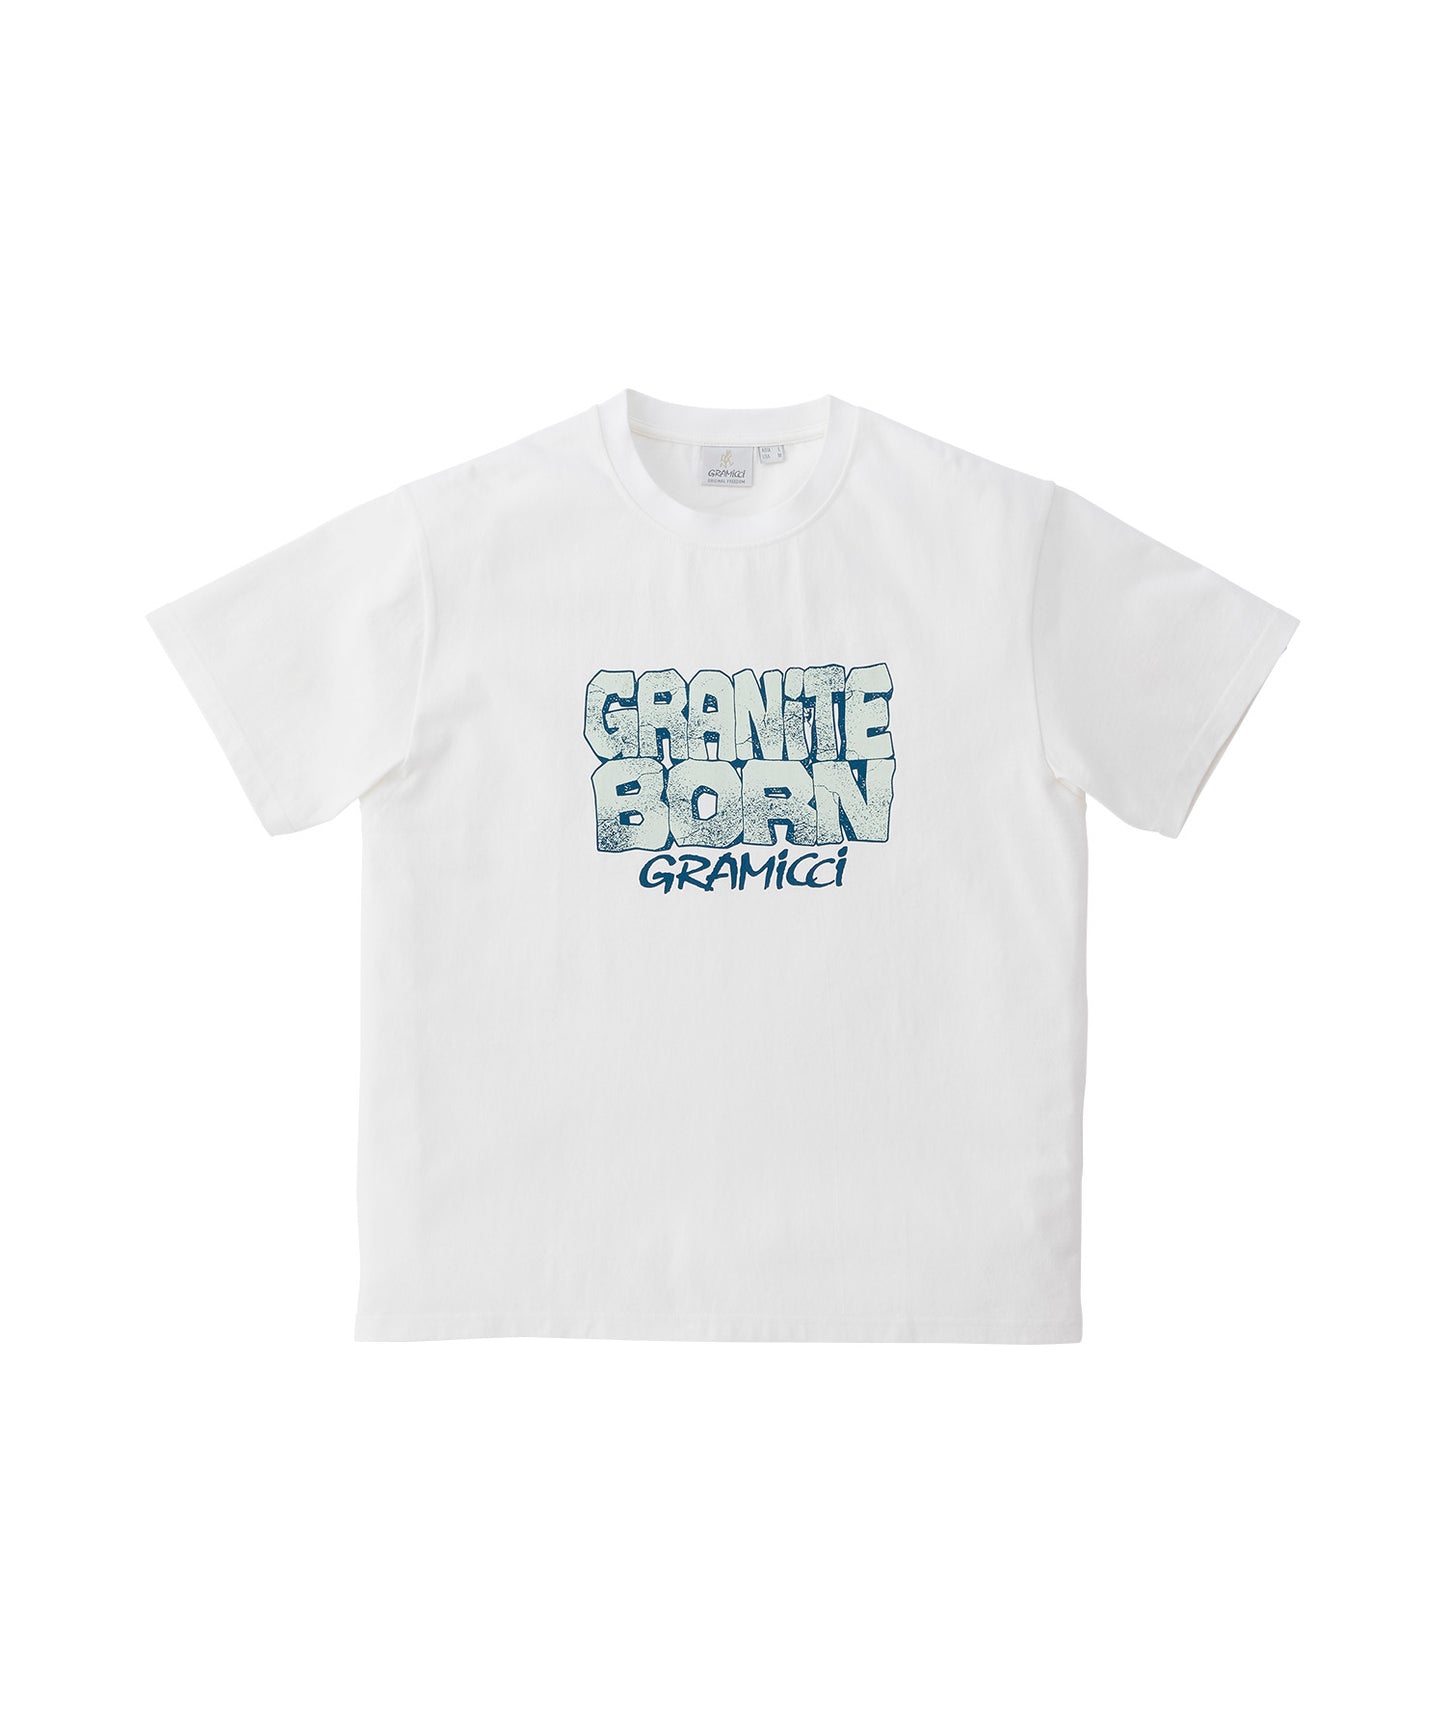 [GRAMICCI グラミチ] GRANITE BORN TEE | グラニットボーンTシャツ